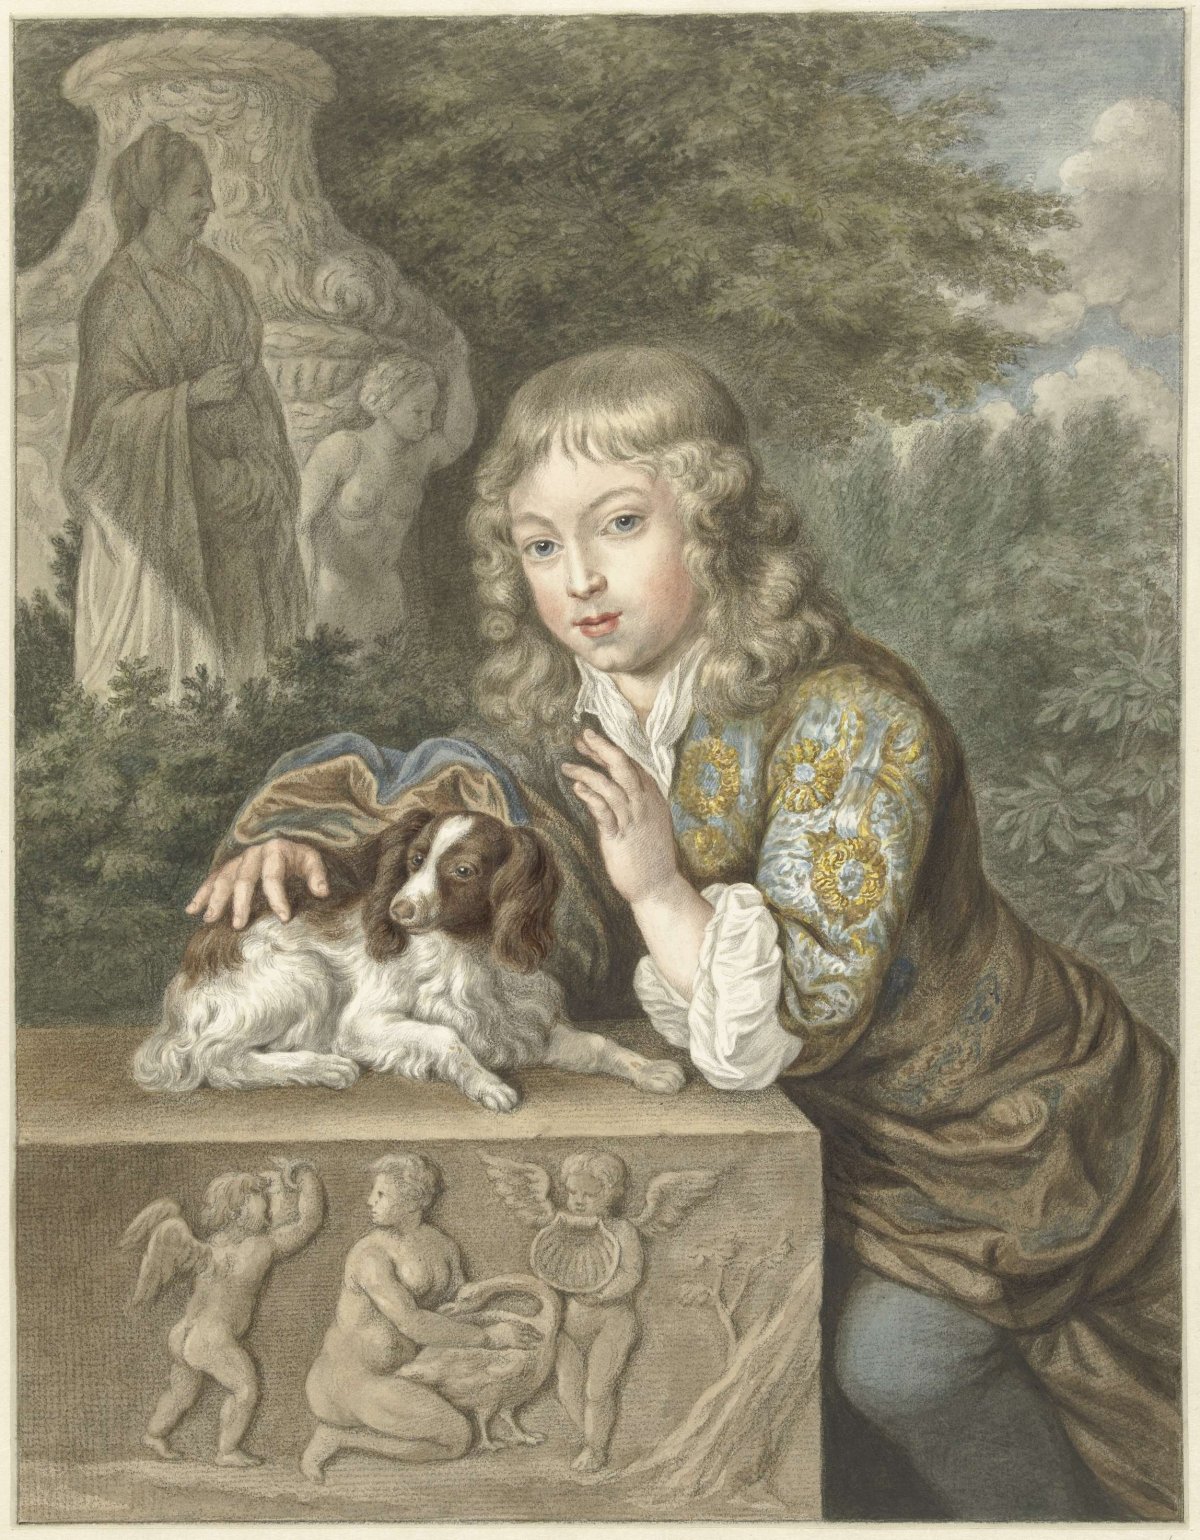 Boy with dog, Abraham Delfos, 1741 - 1820